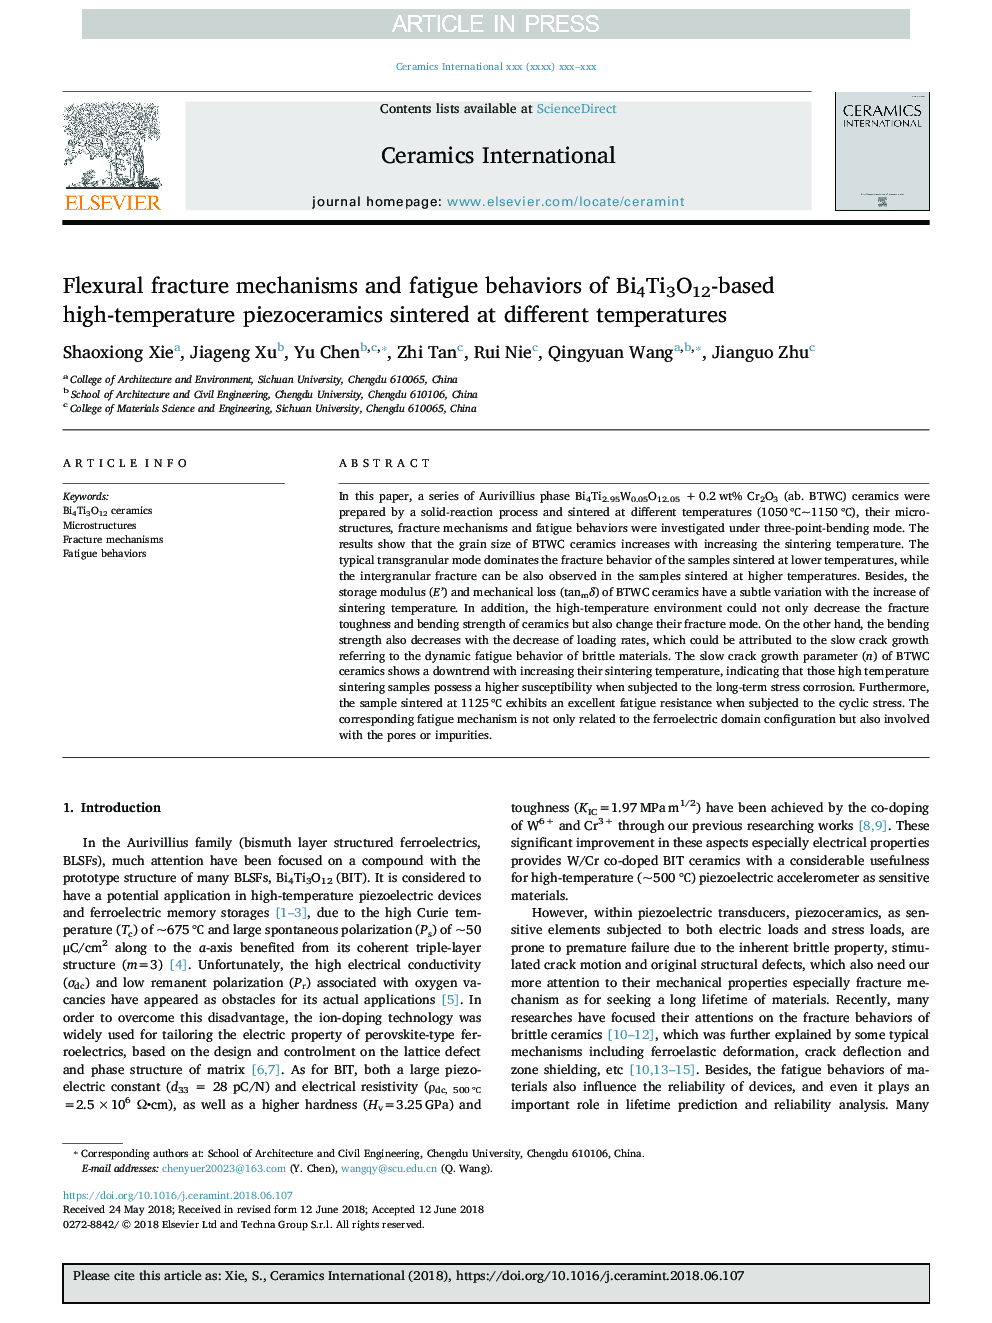 Flexural fracture mechanisms and fatigue behaviors of Bi4Ti3O12-based high-temperature piezoceramics sintered at different temperatures